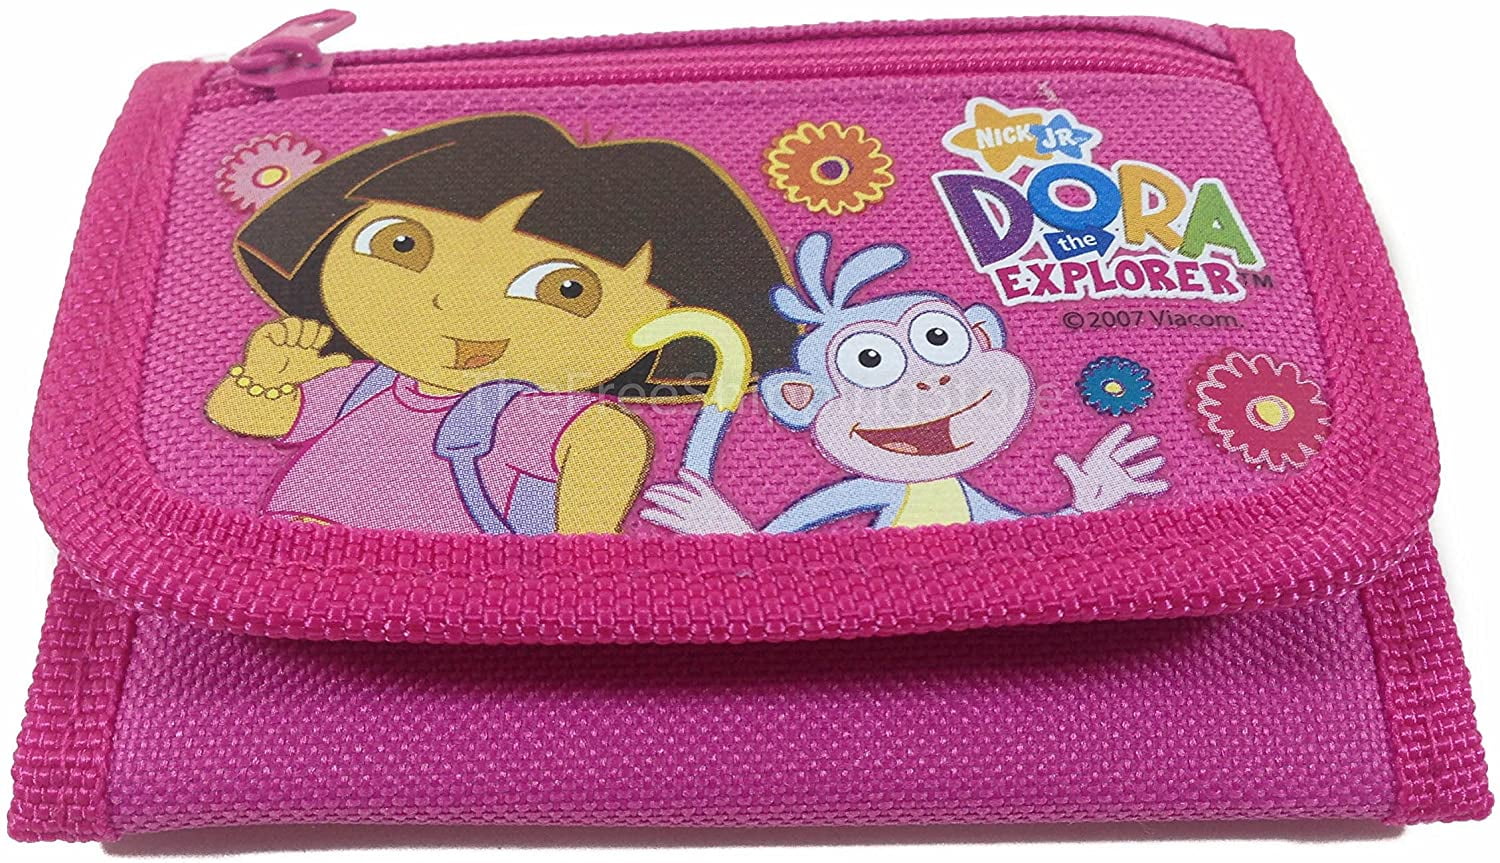 Dora Hot Pink Wallet